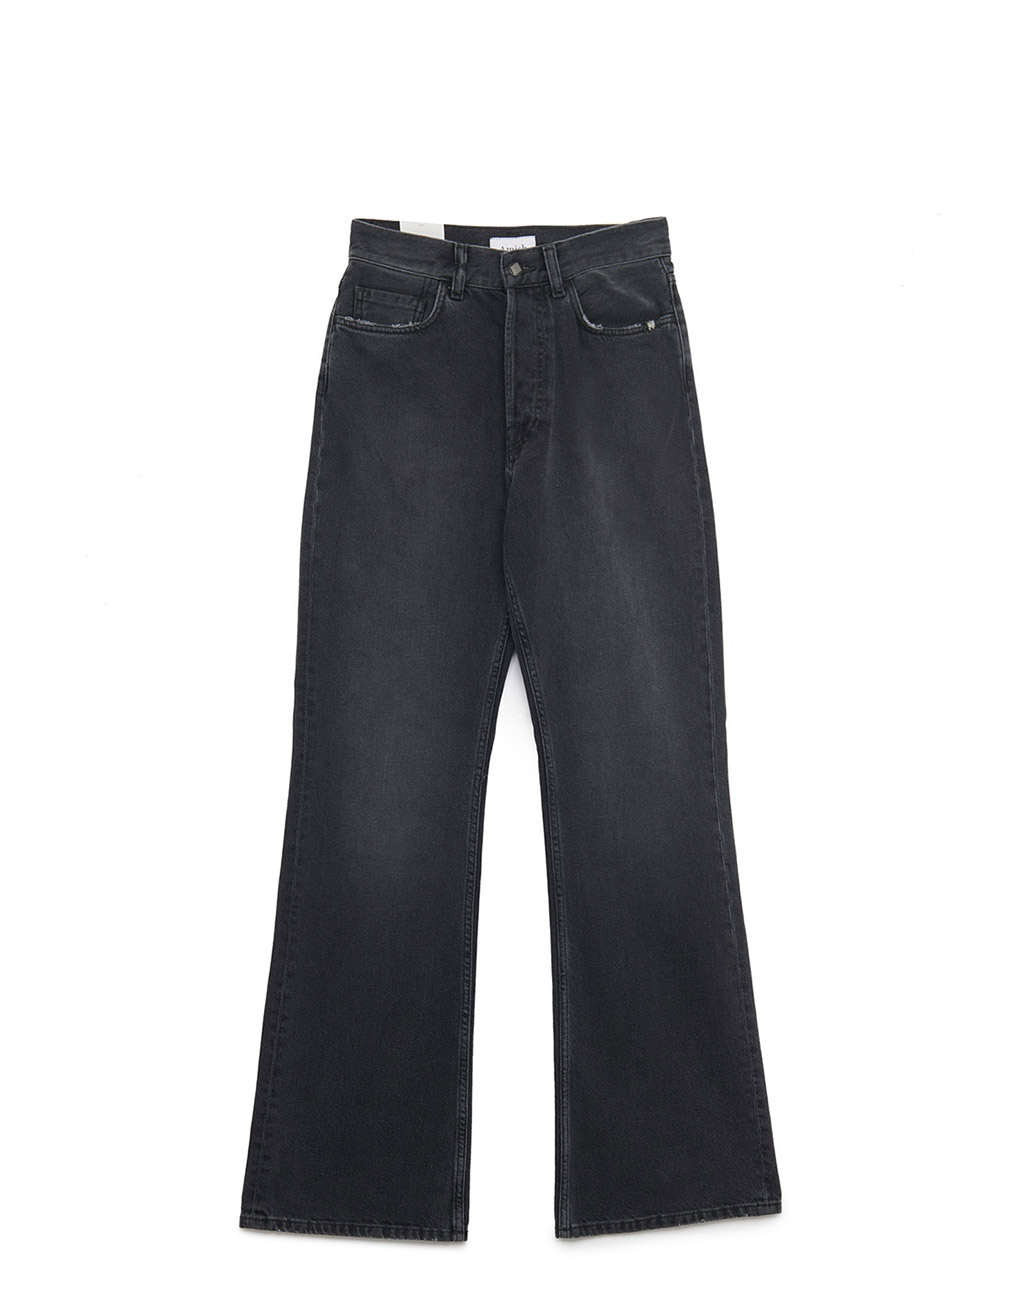 amish black jeans